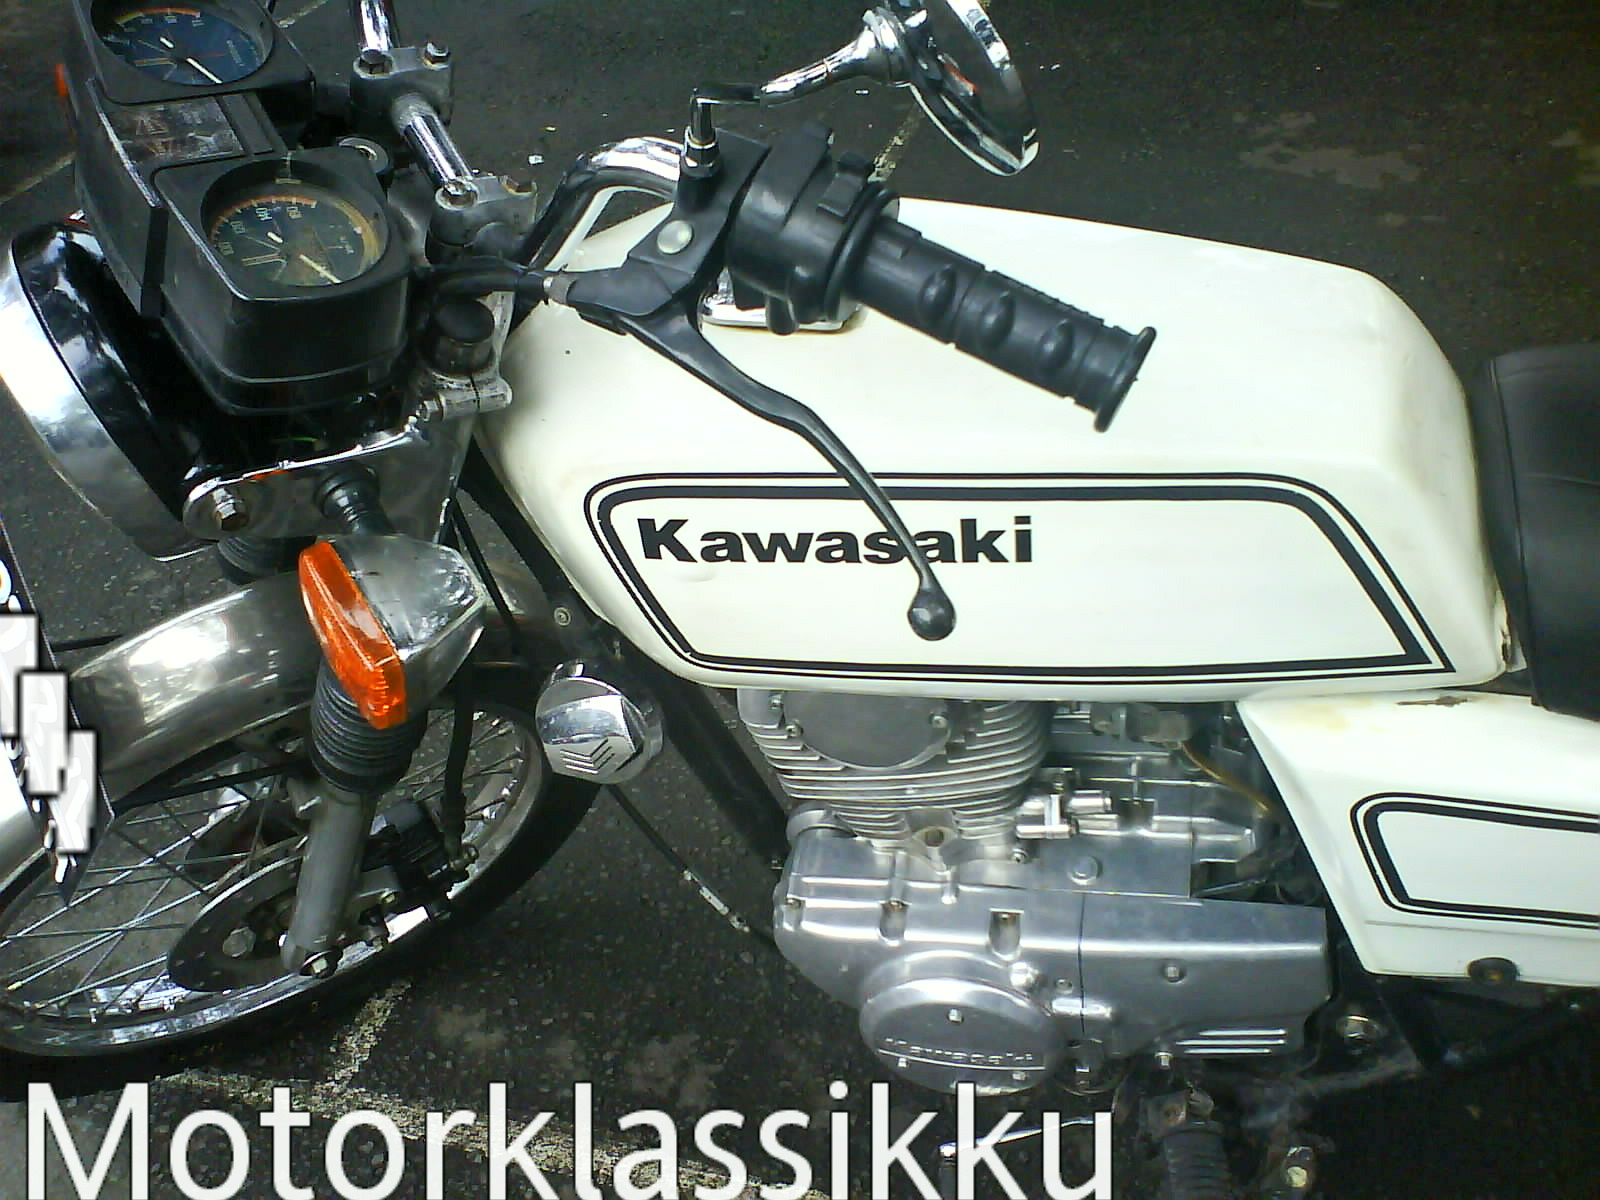 Kawasaki KZ 200 aka Binter Merzy  Motorklassikku